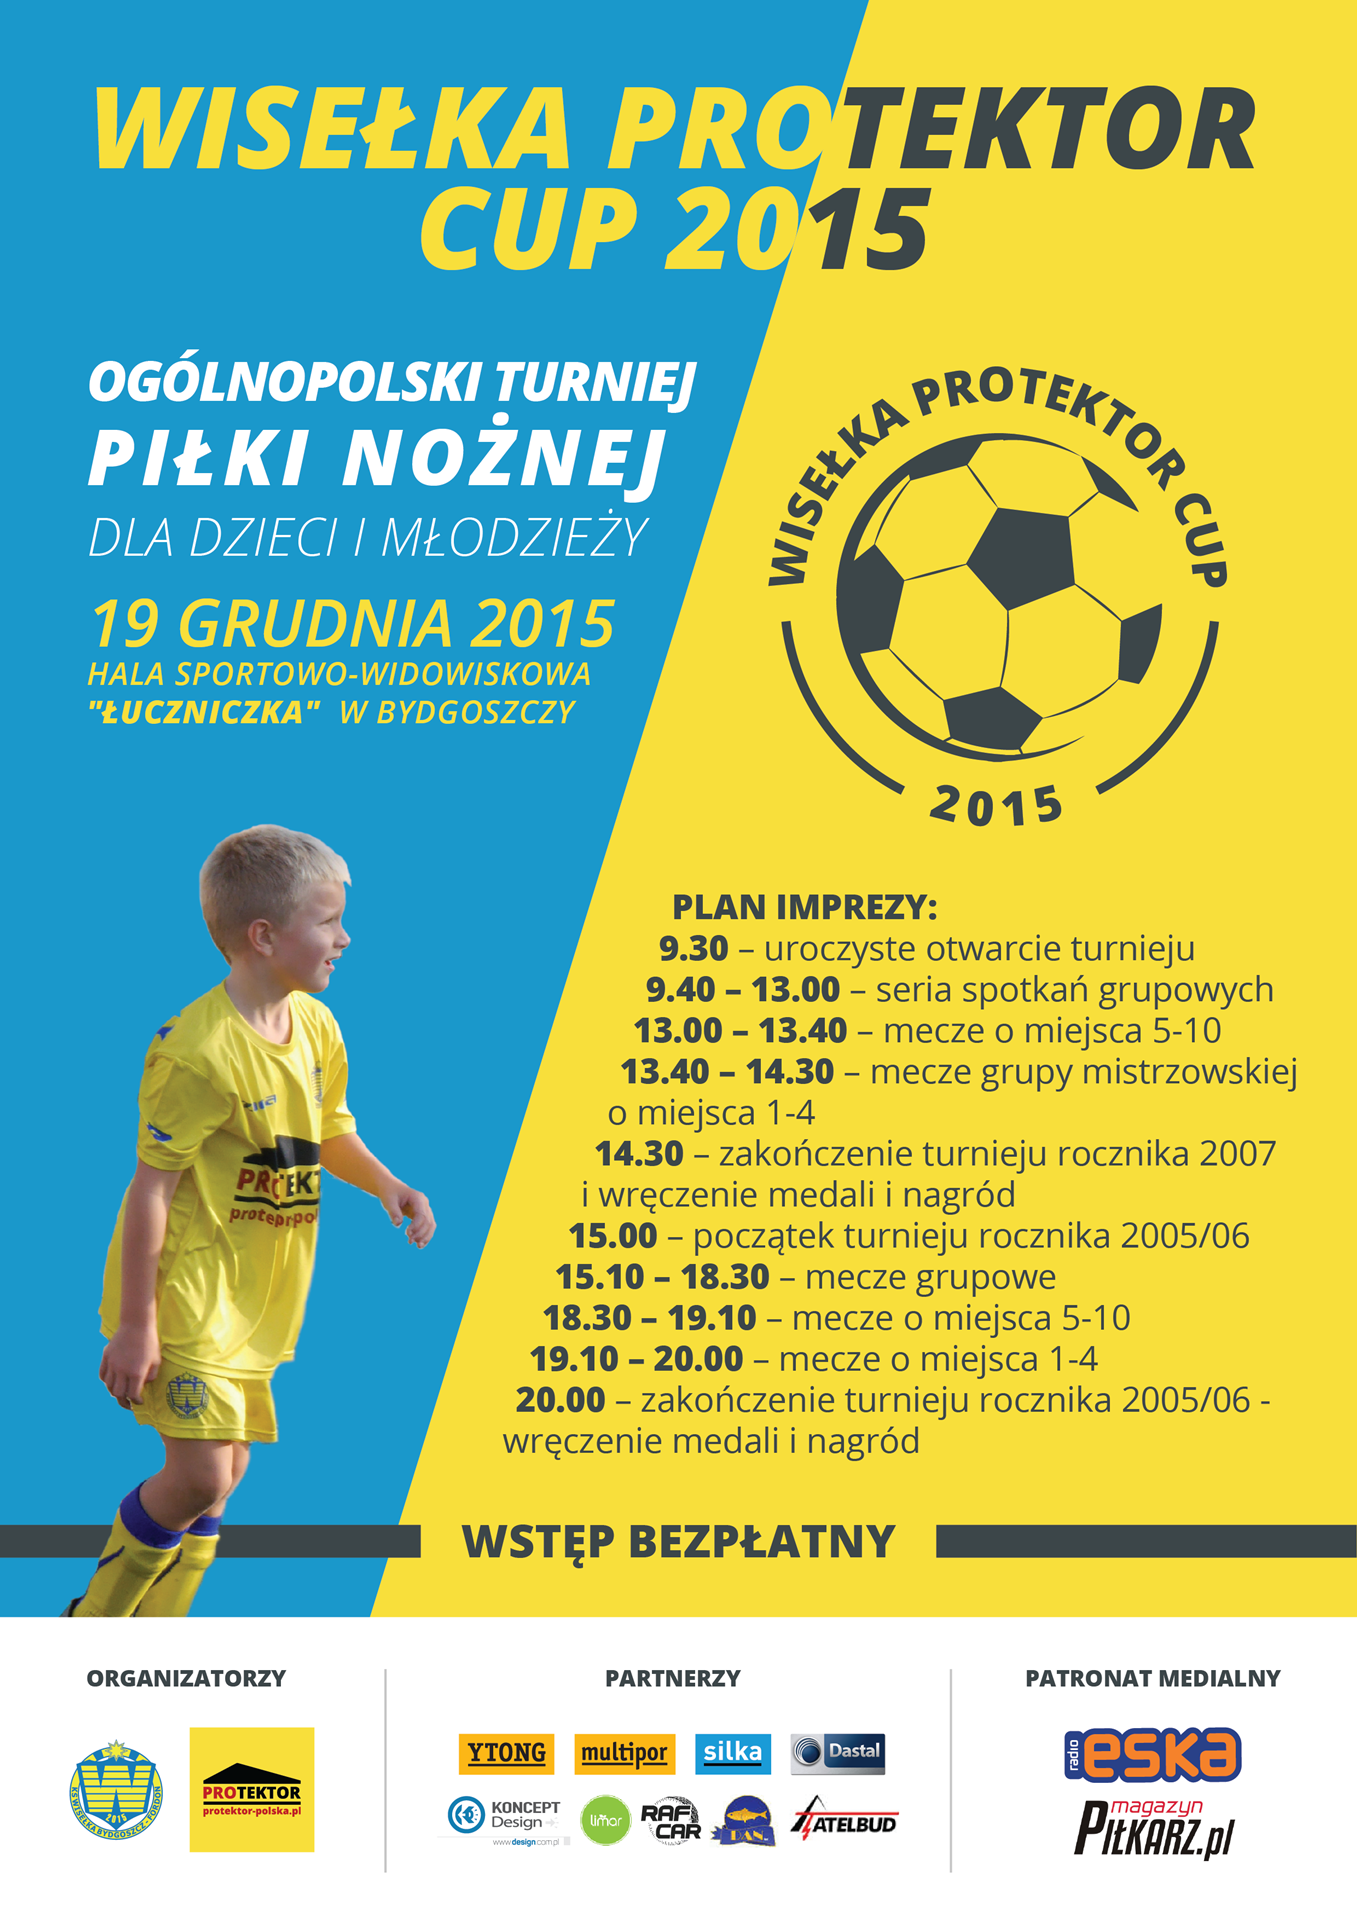 Wisełka PROTEKTOR Cup 2015